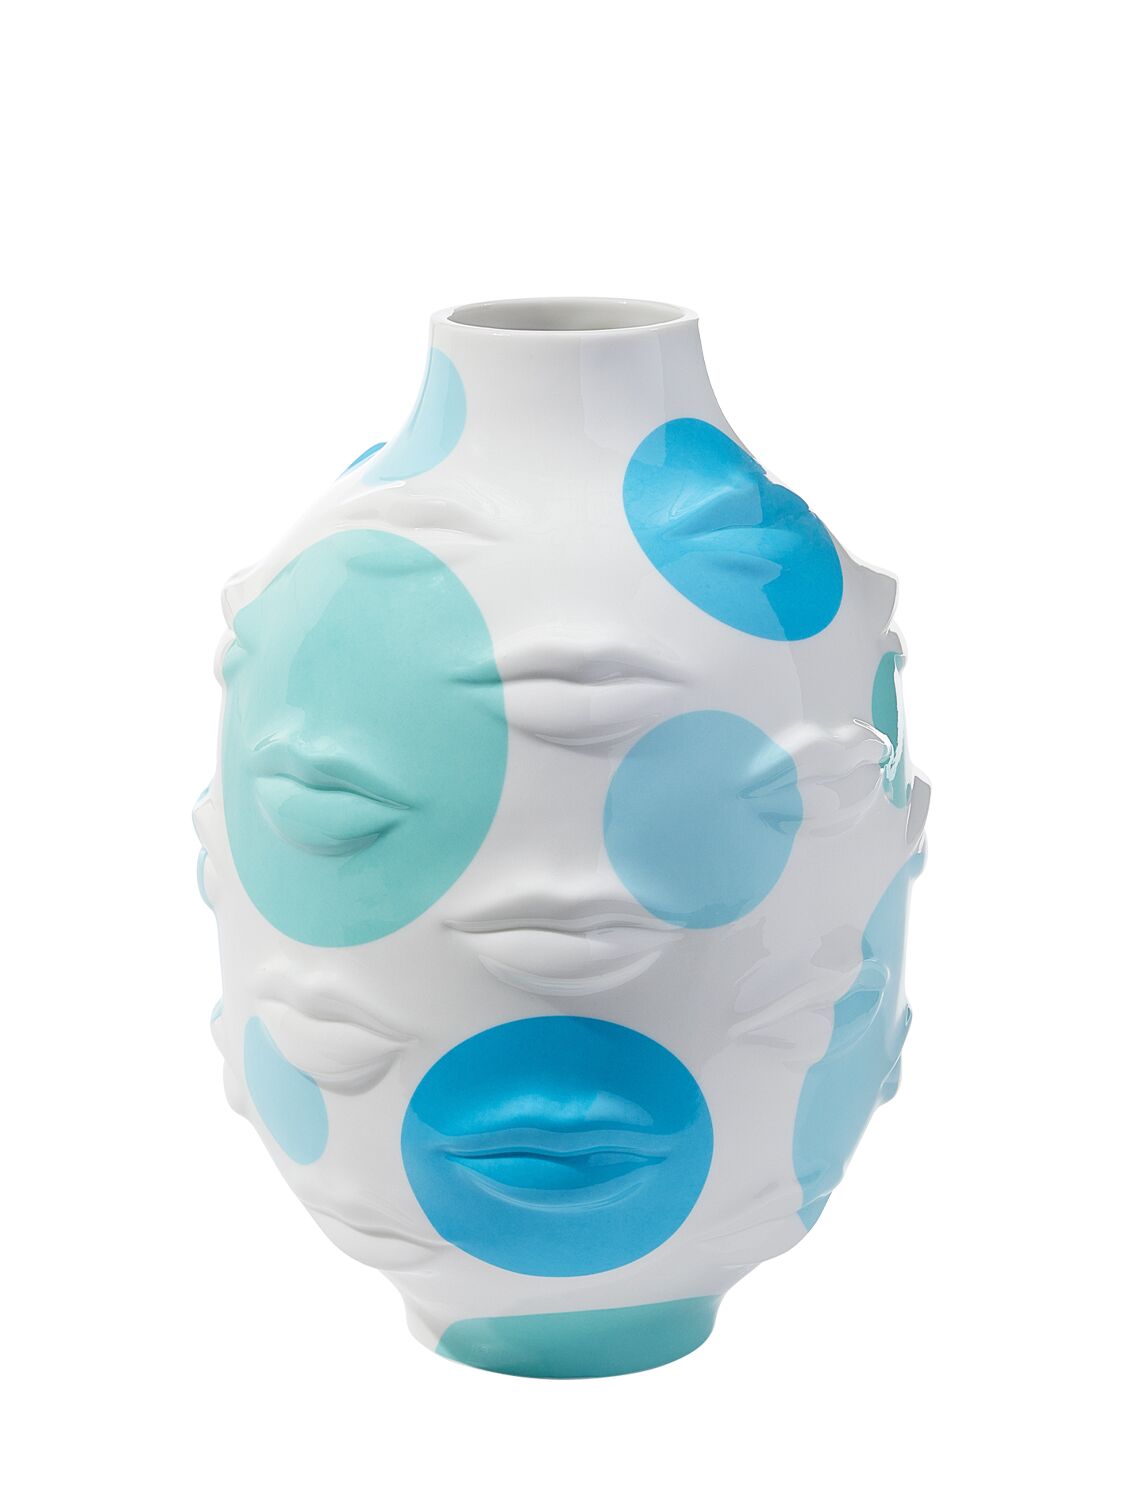 Jonathan Adler L'pop Gala Limited Edition Round Vase In Blue